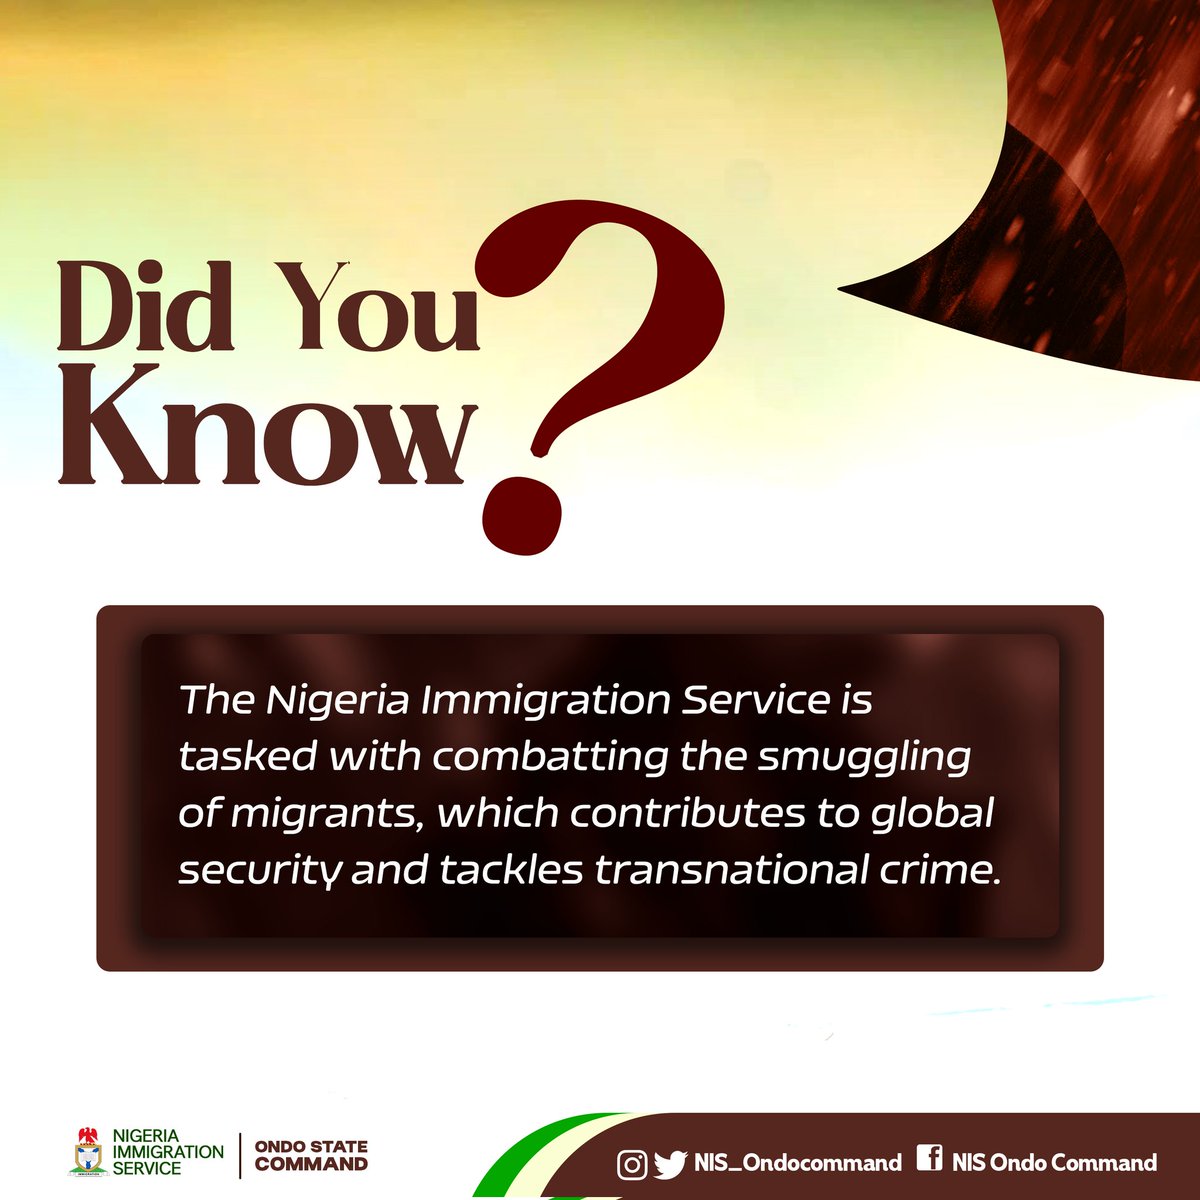 Did you know?

#NISdeyforyou #NISondocommand
#Immigration #KnowledgeIsPower 
#ondostate #Akure  #Nigeria